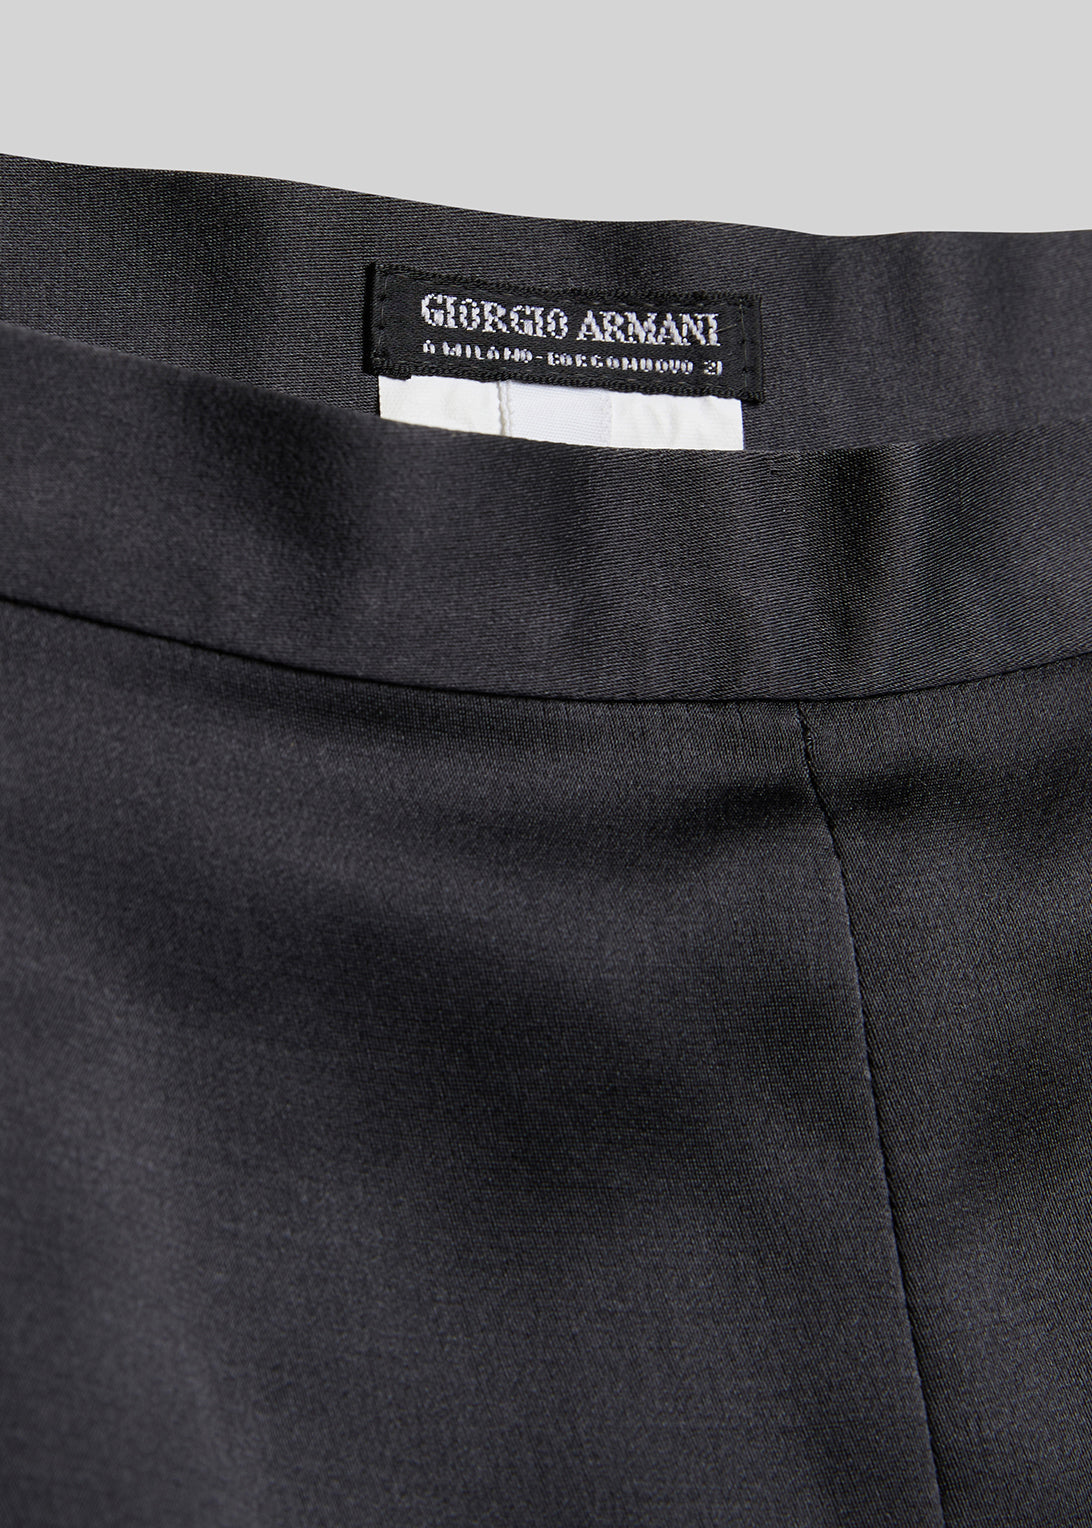 Giorgio Armani mens tailored trousers